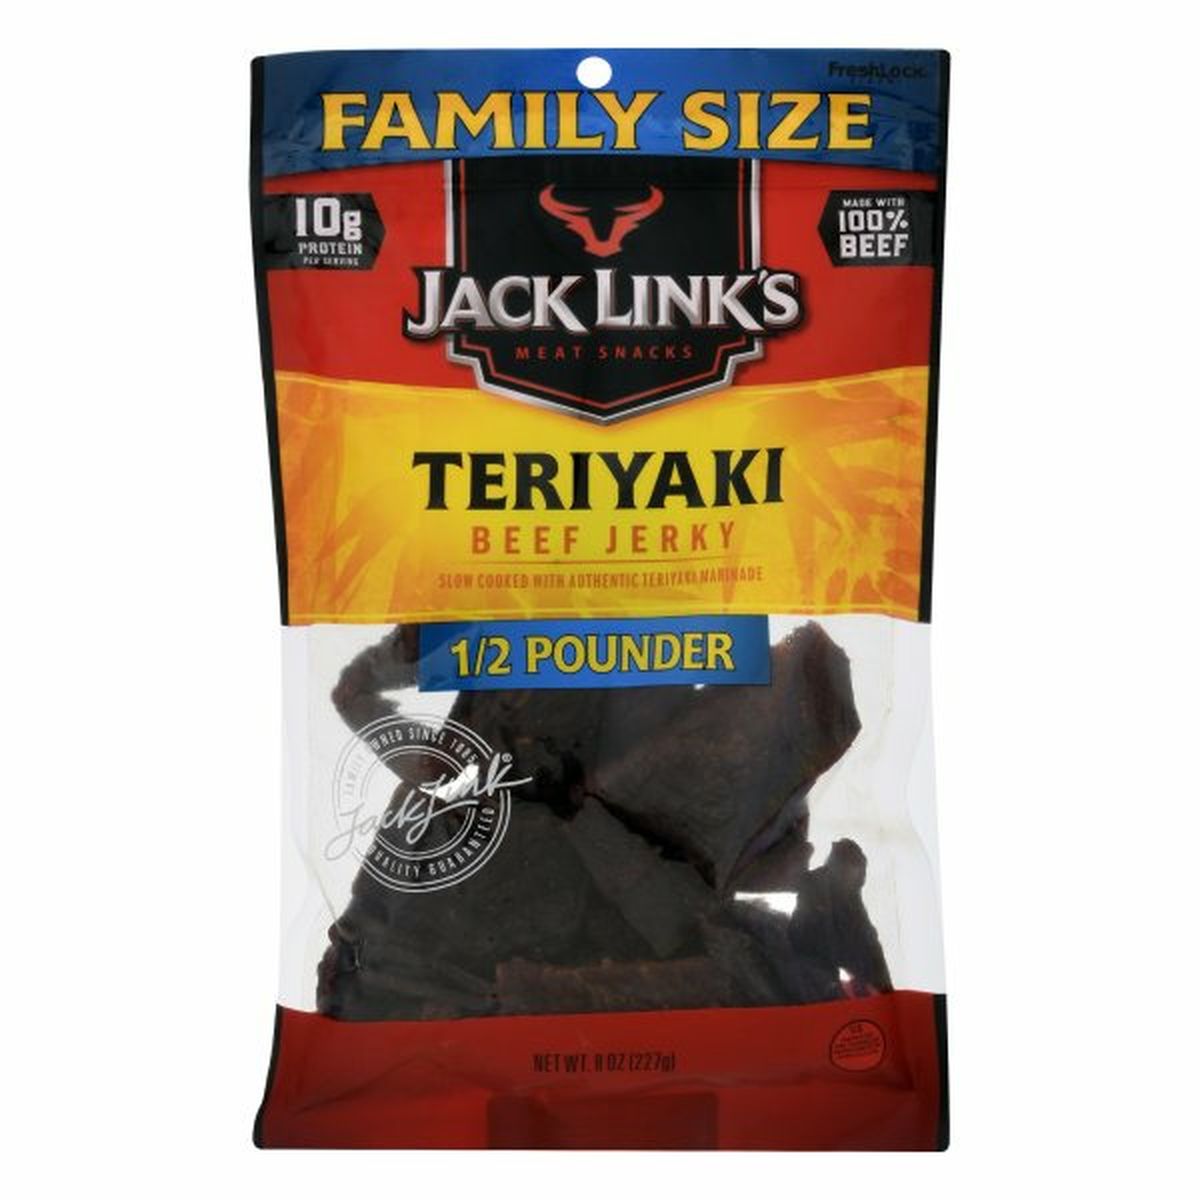 Calories in Jack Link's Beef Jerky, Teriyaki, Family Size